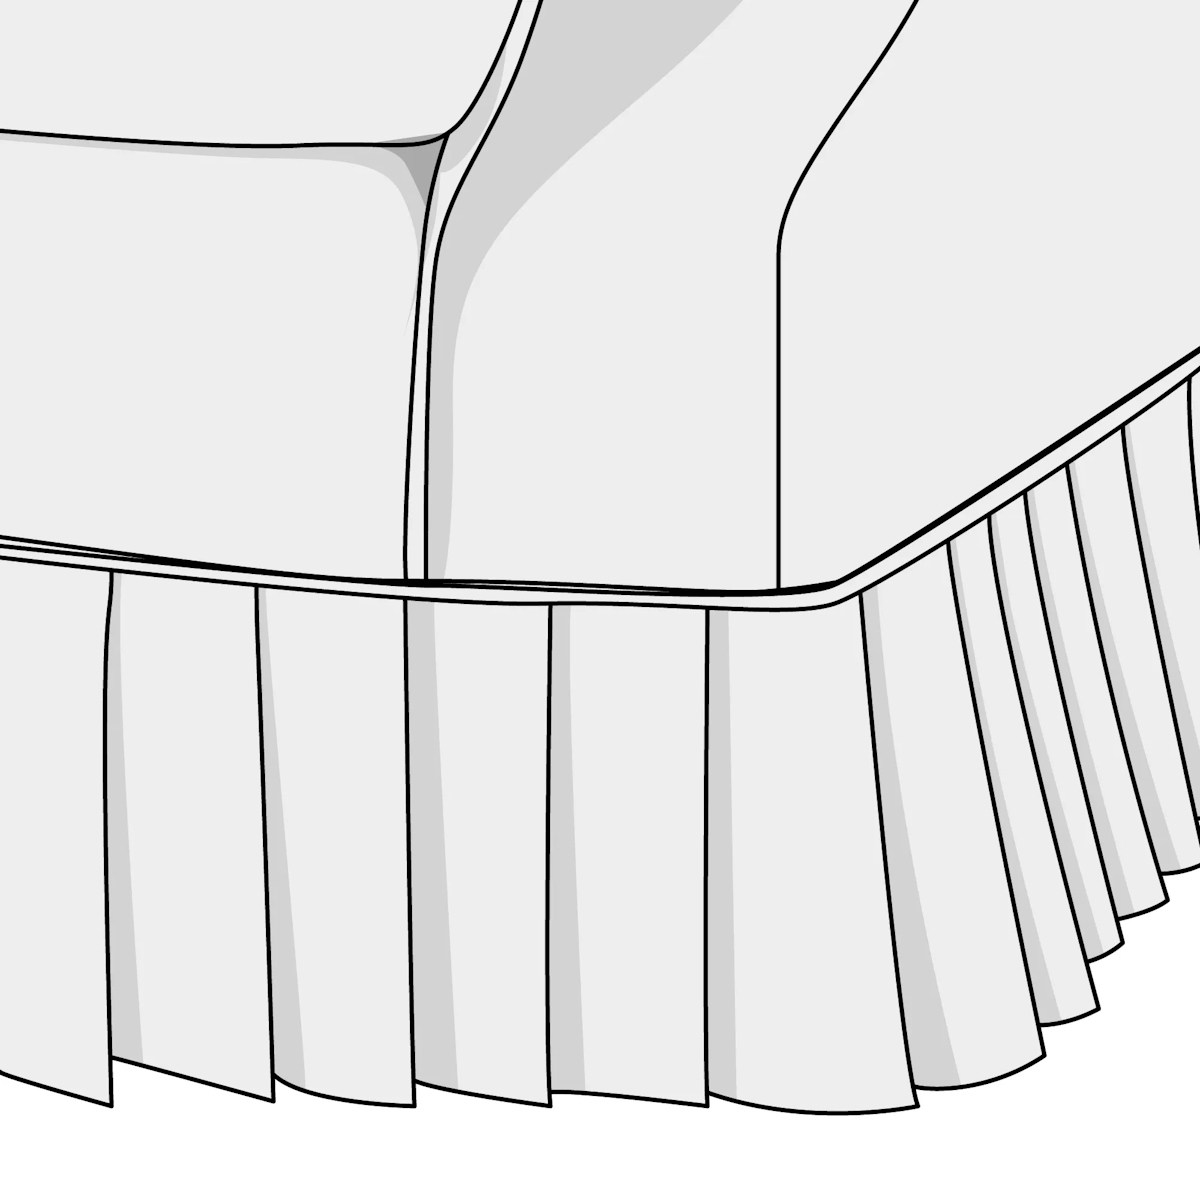 Upholstery illustration of a side or knife pleat skirt